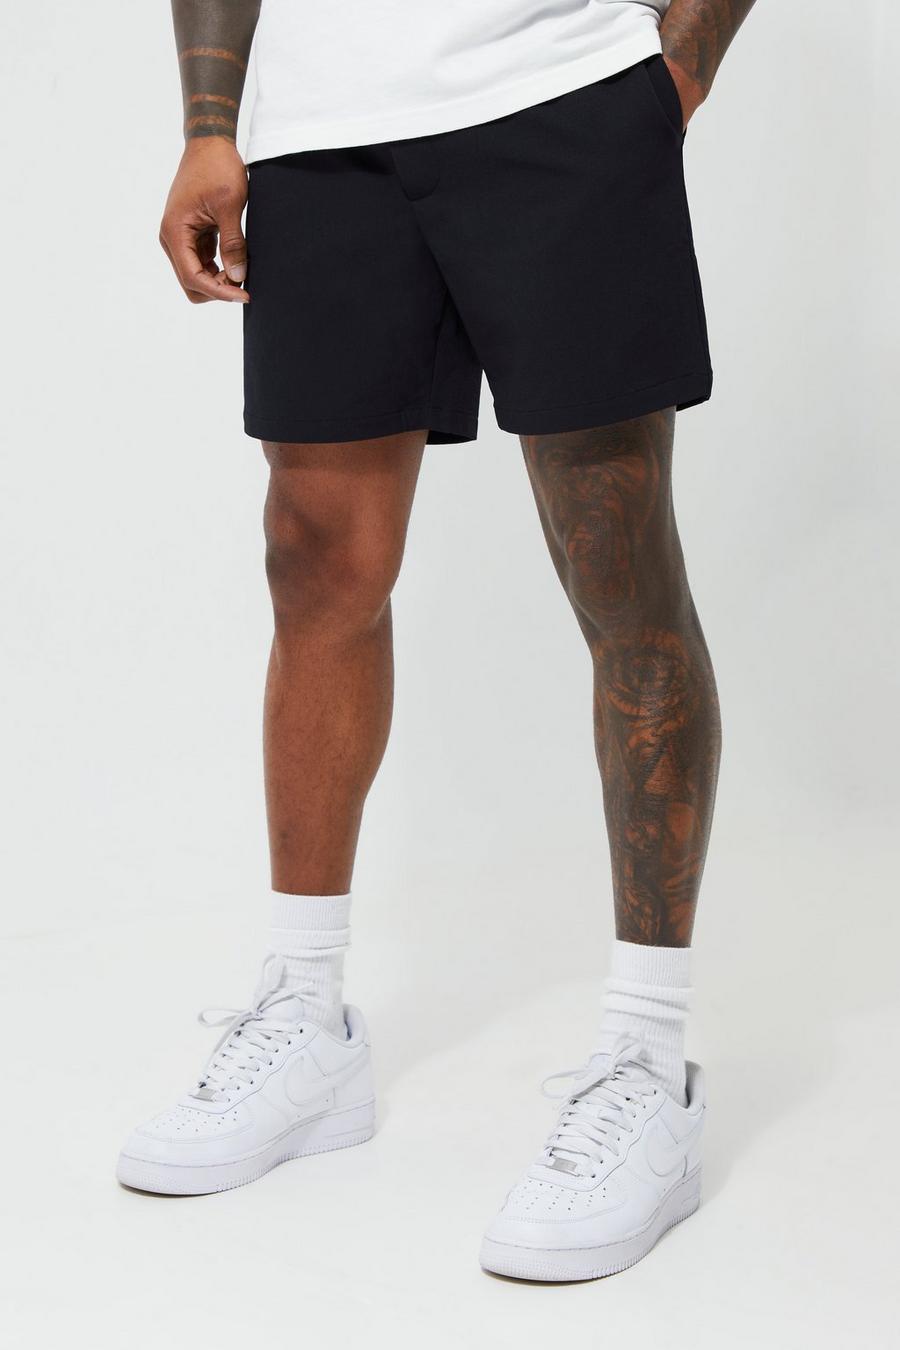 Black Comfortabele Elastische Stretch Shorts